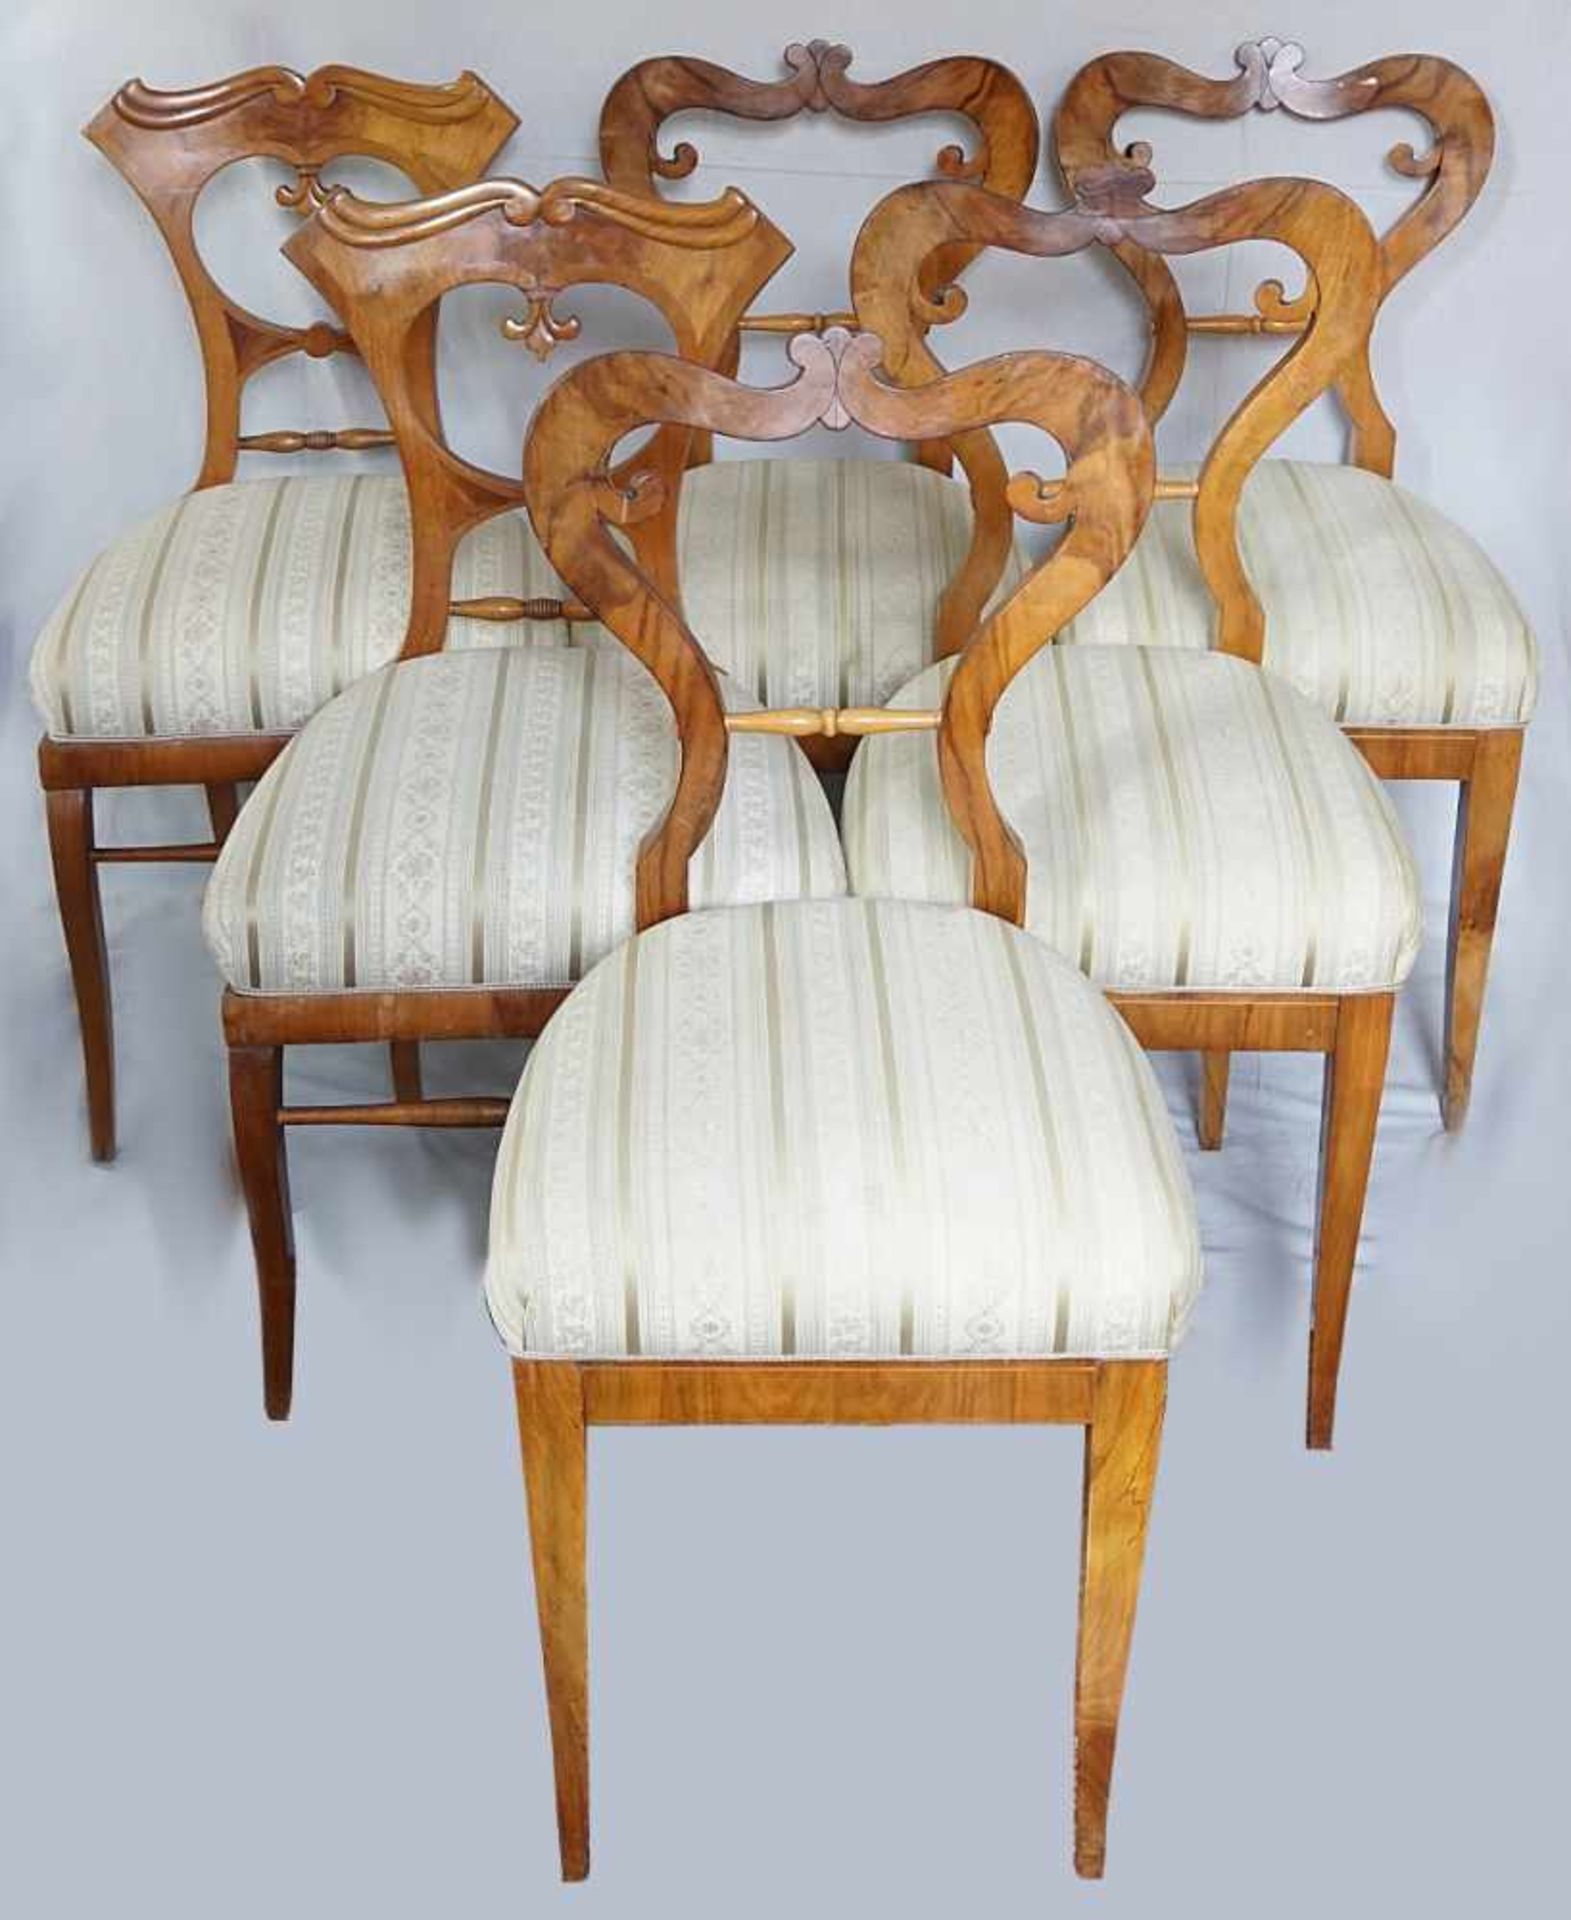 1 SitzgarniturBiedermeier/Wiener Barock 19. Jh. ovale Tischpl. ausziehbar L ca. 140cm m. 6 Stühlen H